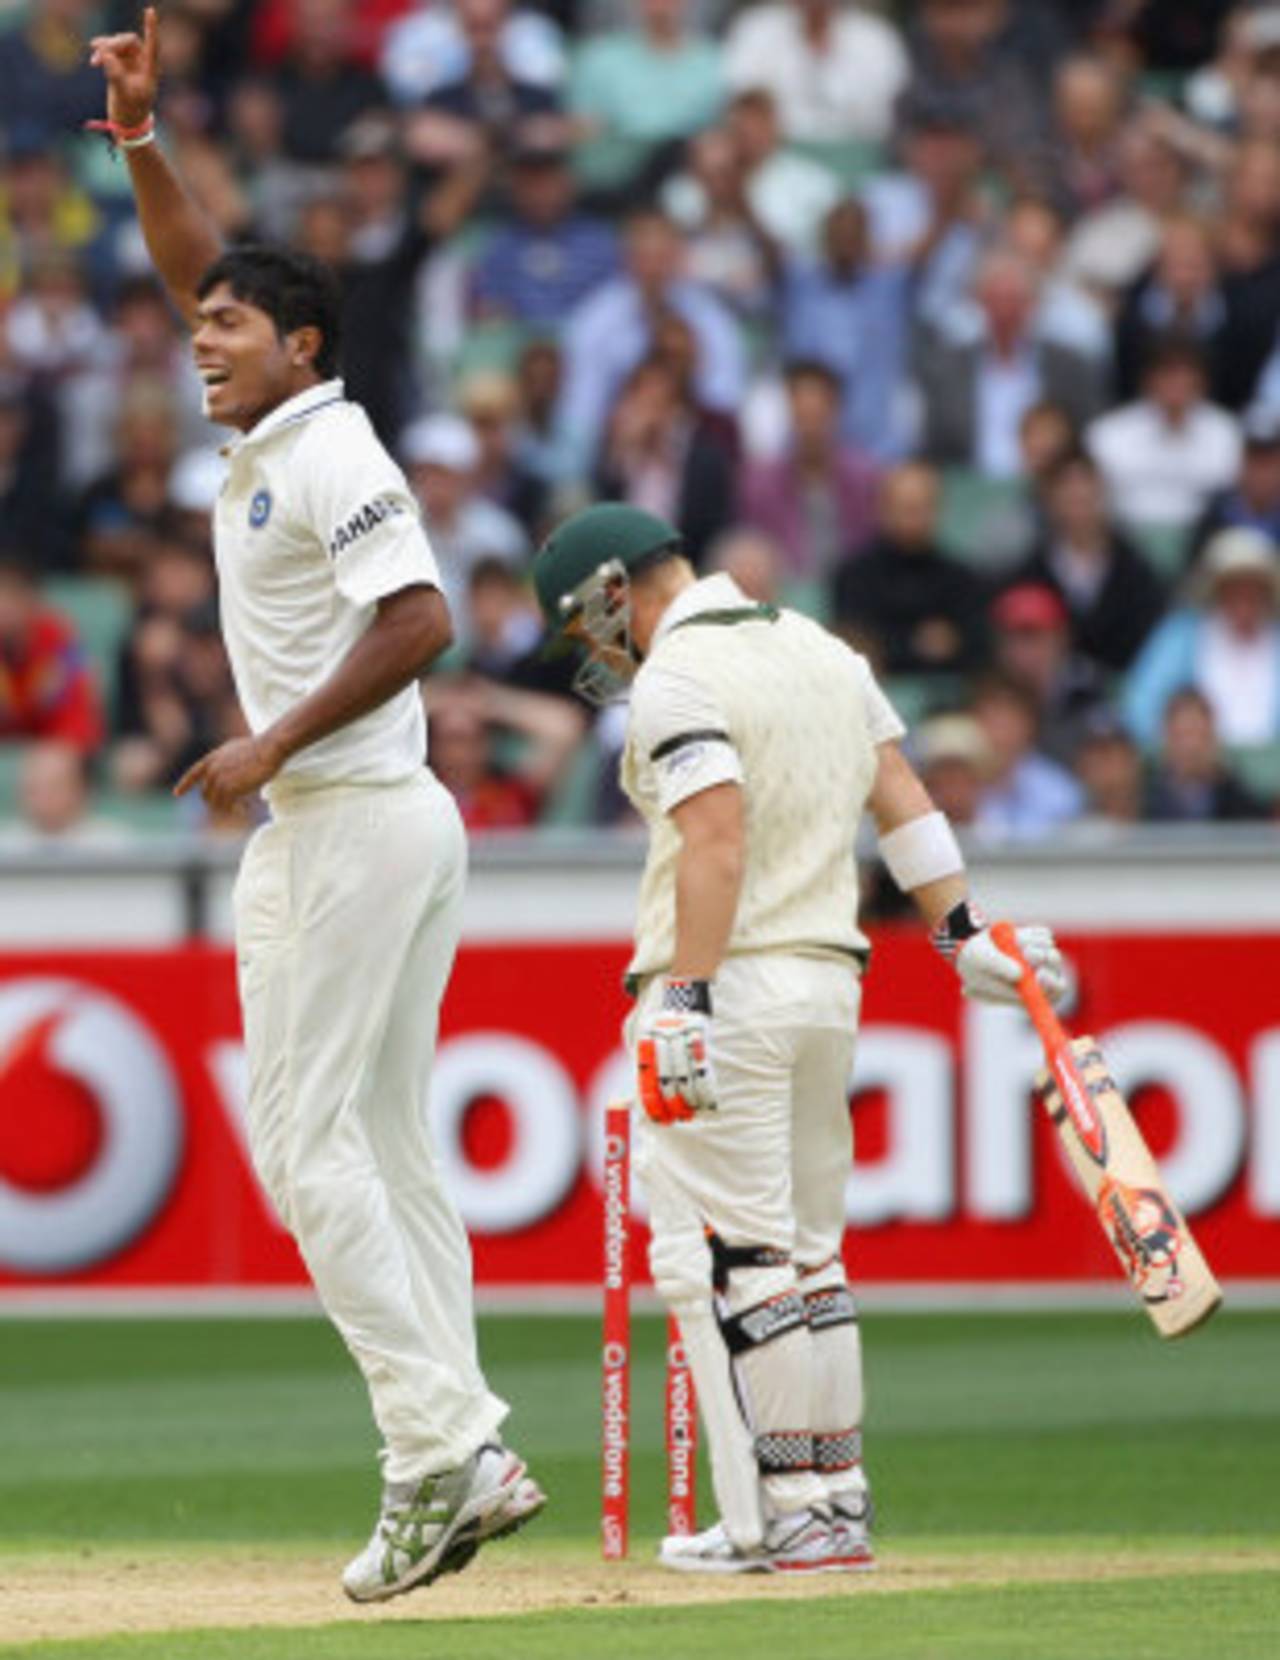 Umesh Yadav got rid of David Warner, Australia v India, 1st Test, Melbourne, 1st day, December 26, 2011